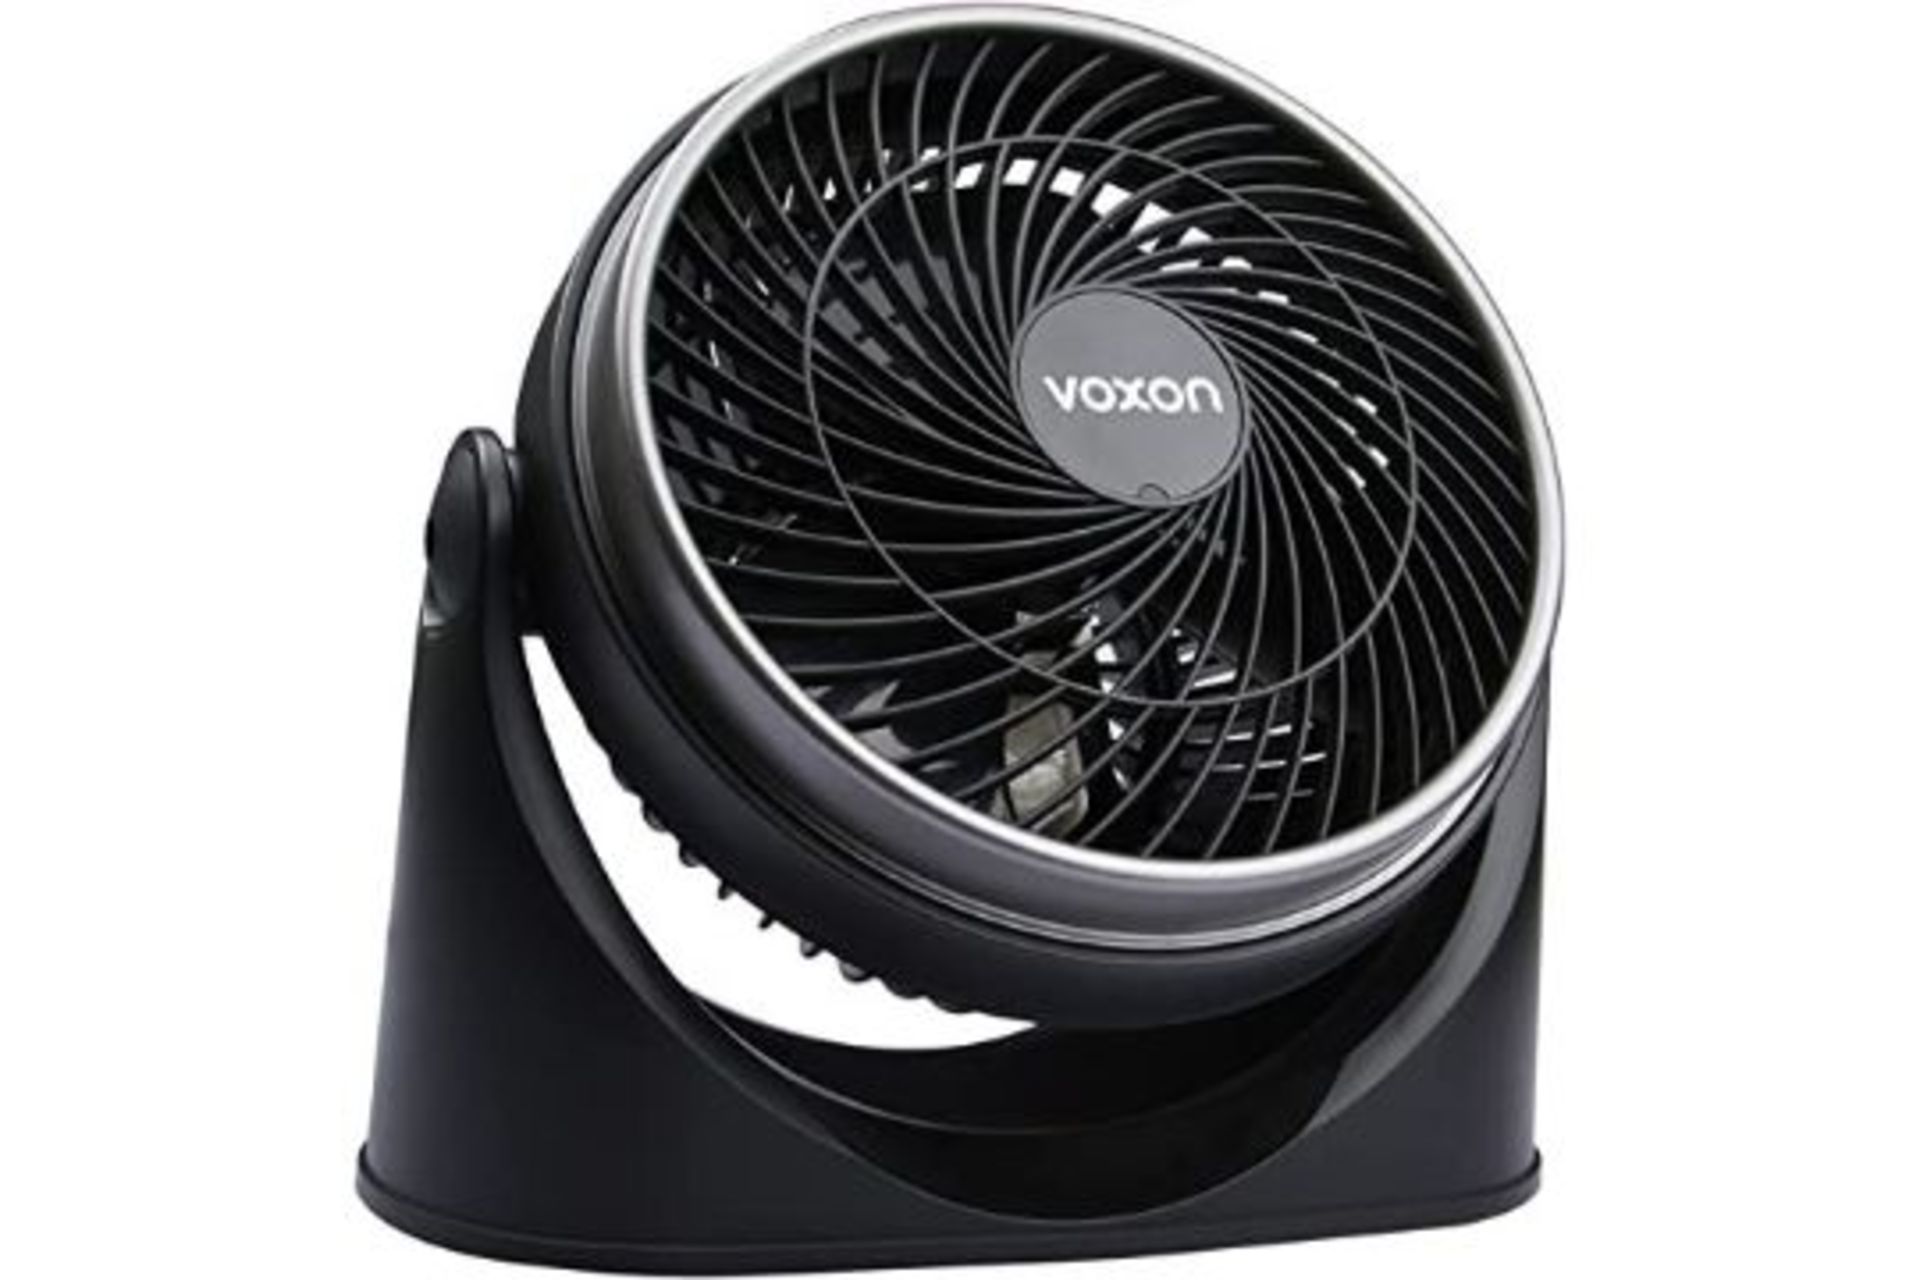 RRP £29.99 - Voxon Turboforce Air Circulator Table Fan Head Pivots 90 Degrees 3 Speeds